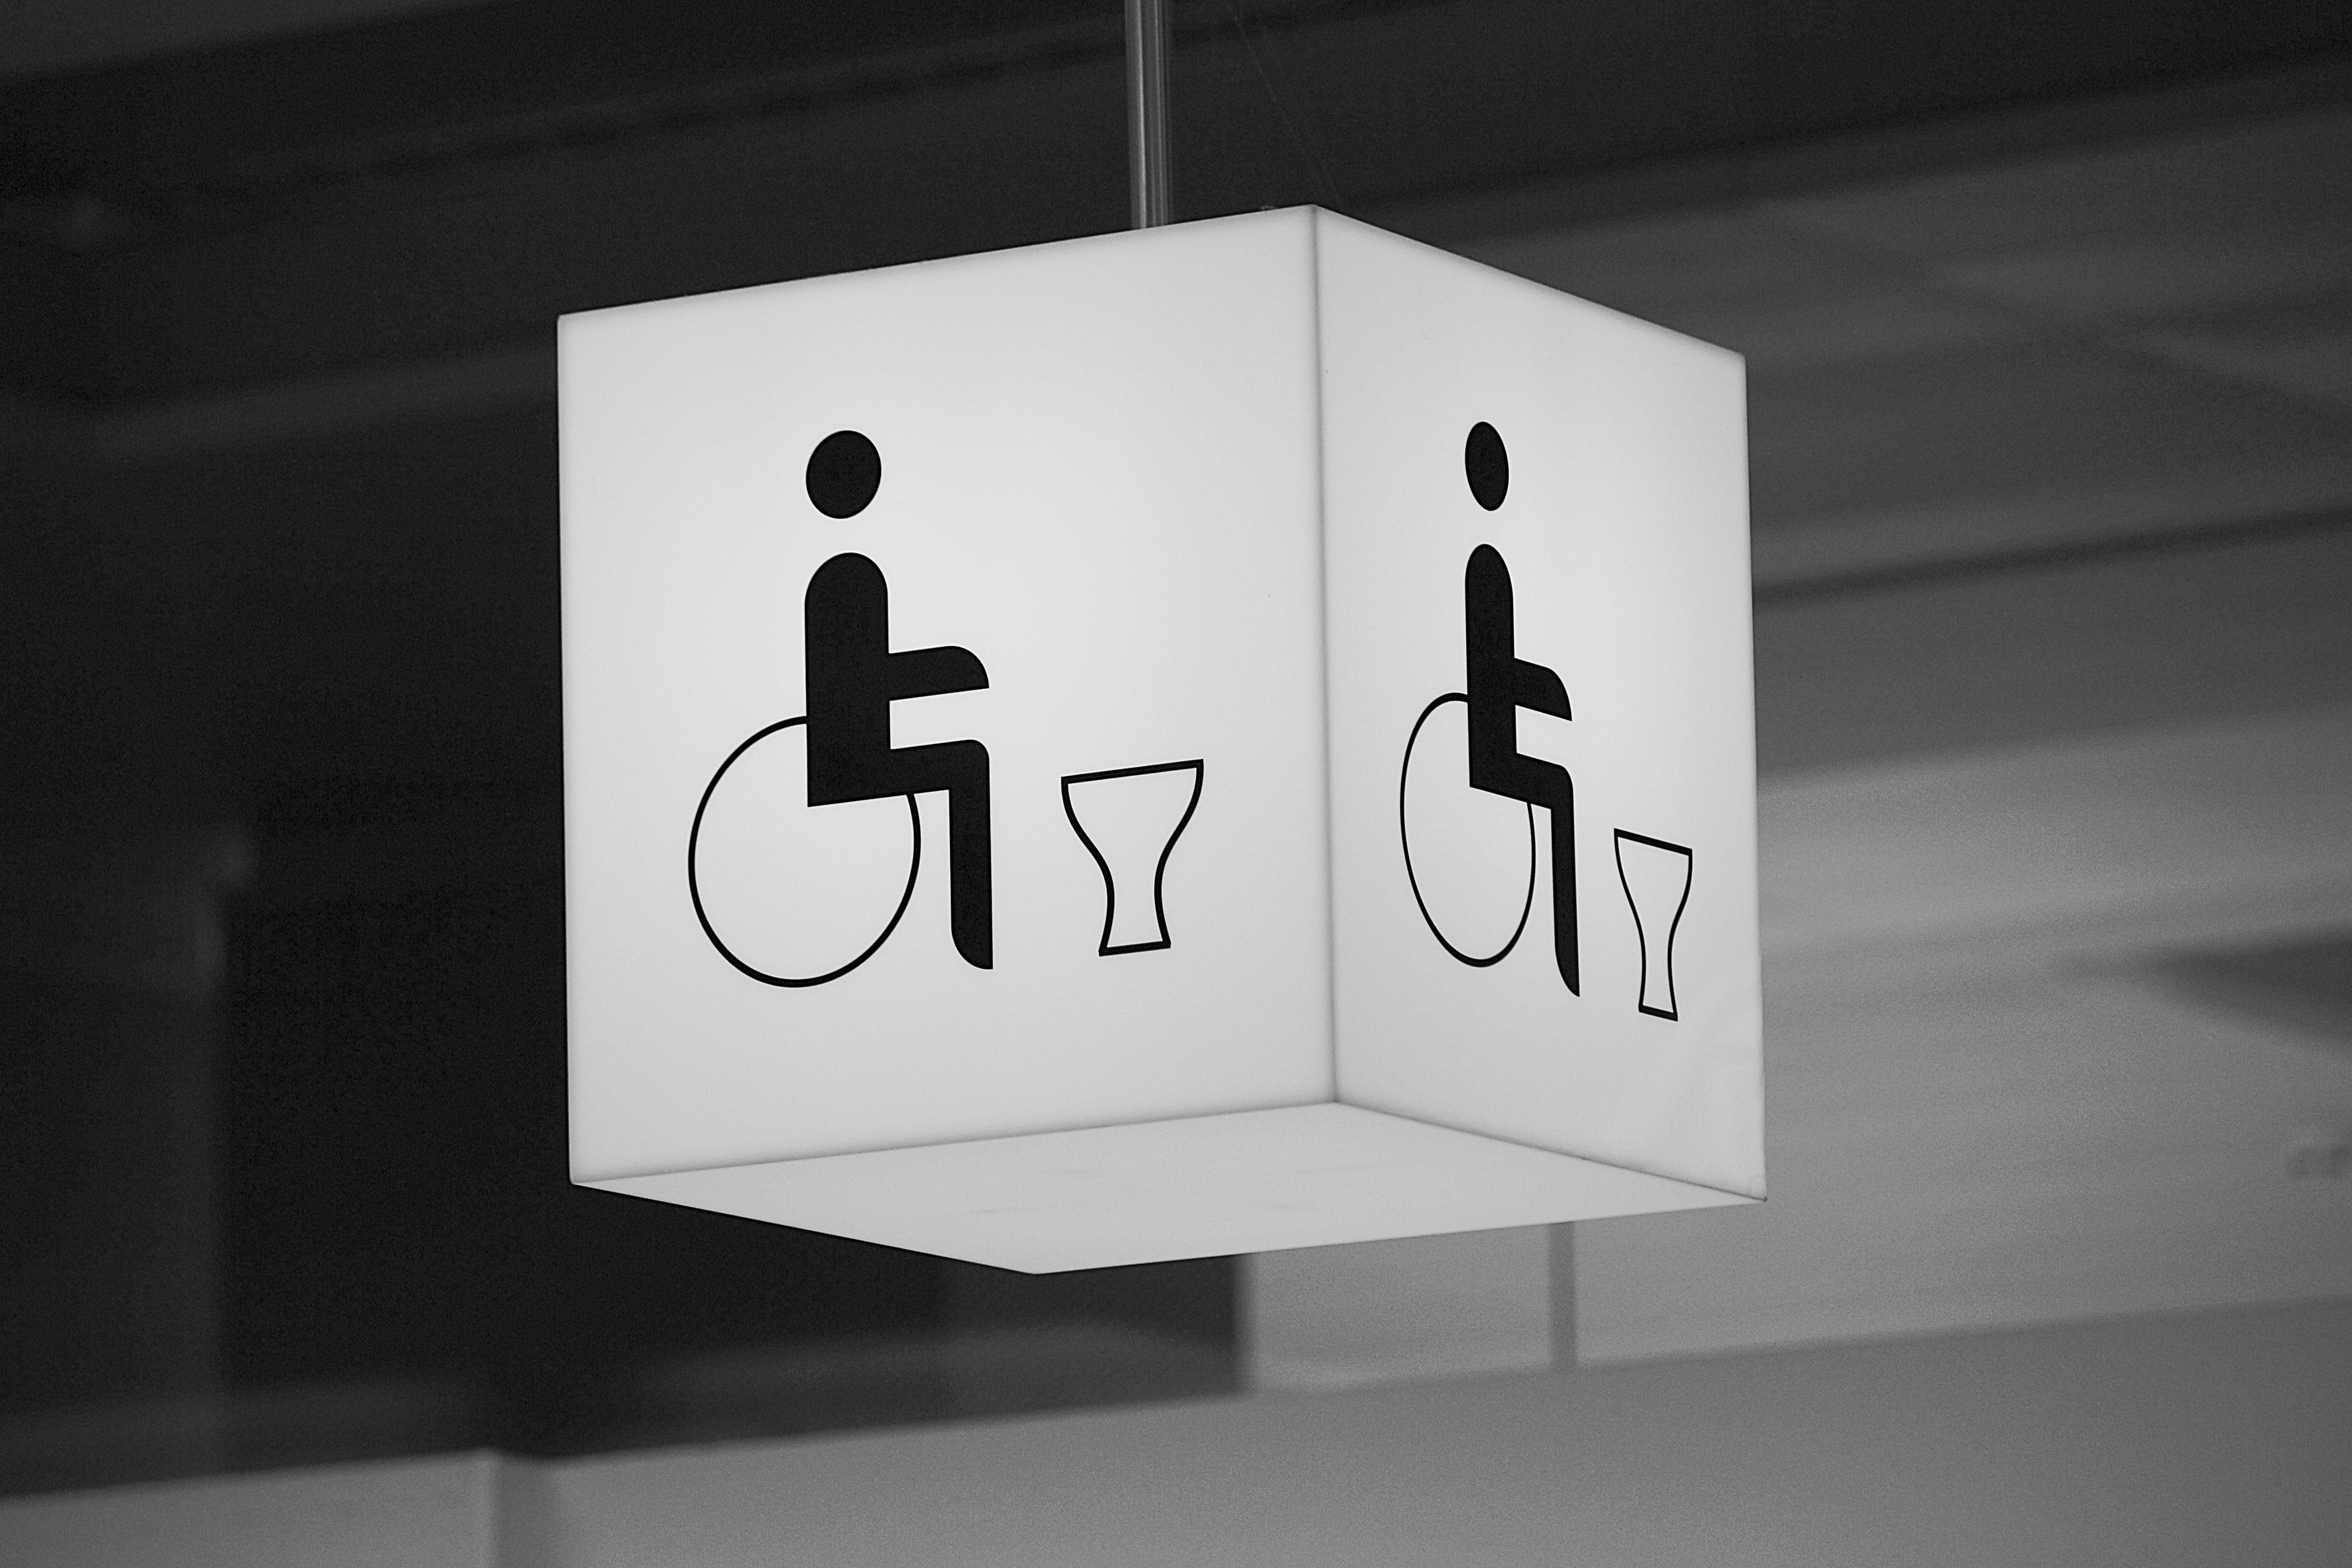 Banyo discapacitats / Pxfuel